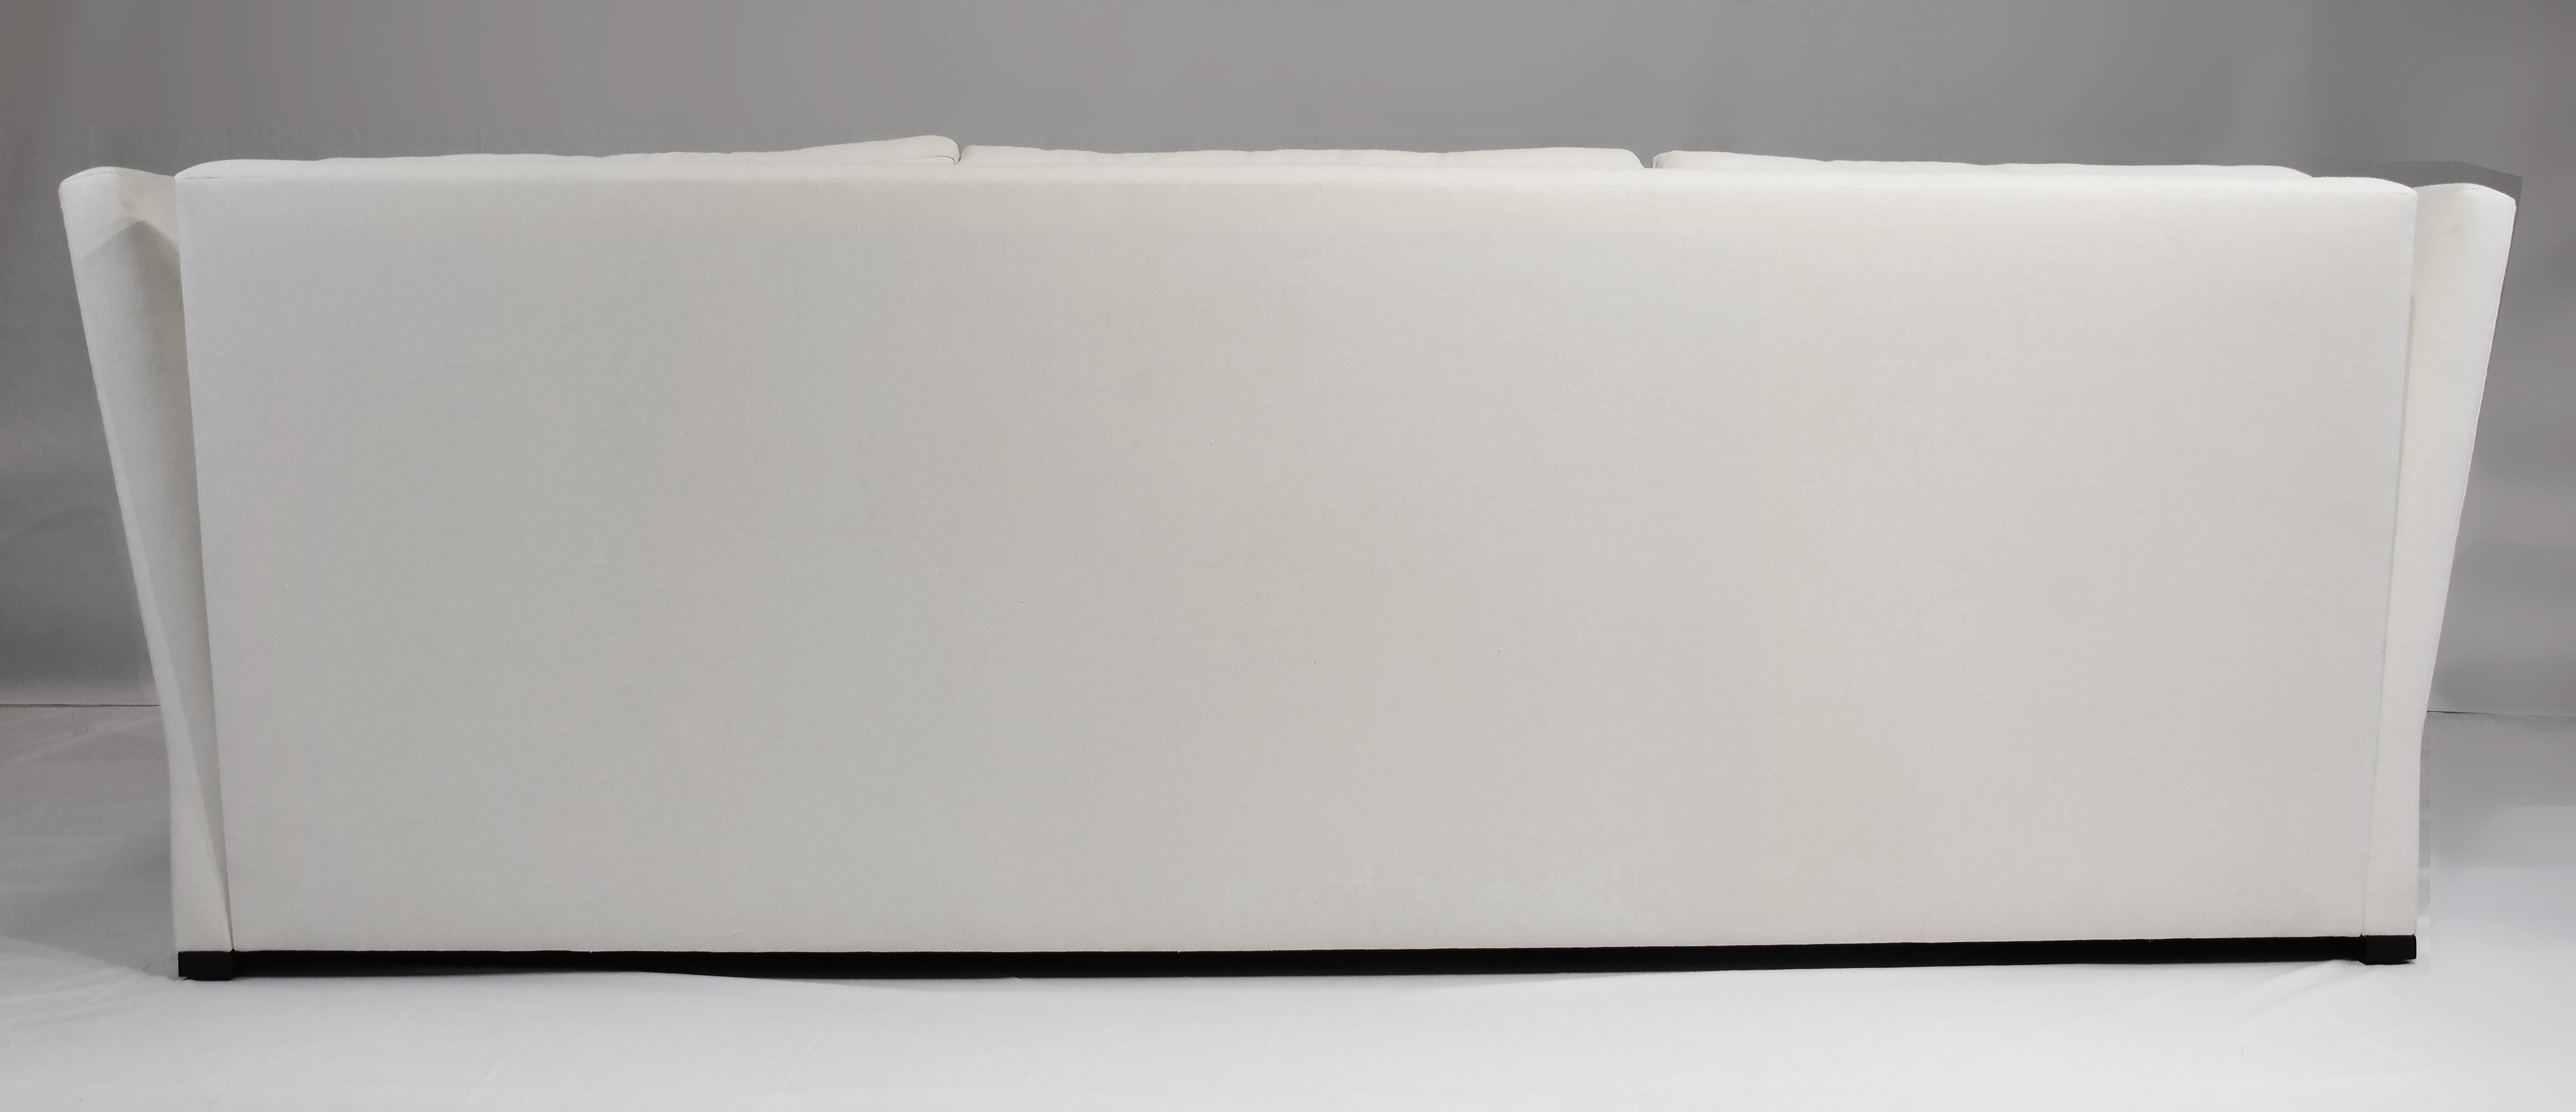 Le Jeune Upholstery Jones Angled Arm Sofa Showroom Model For Sale 2